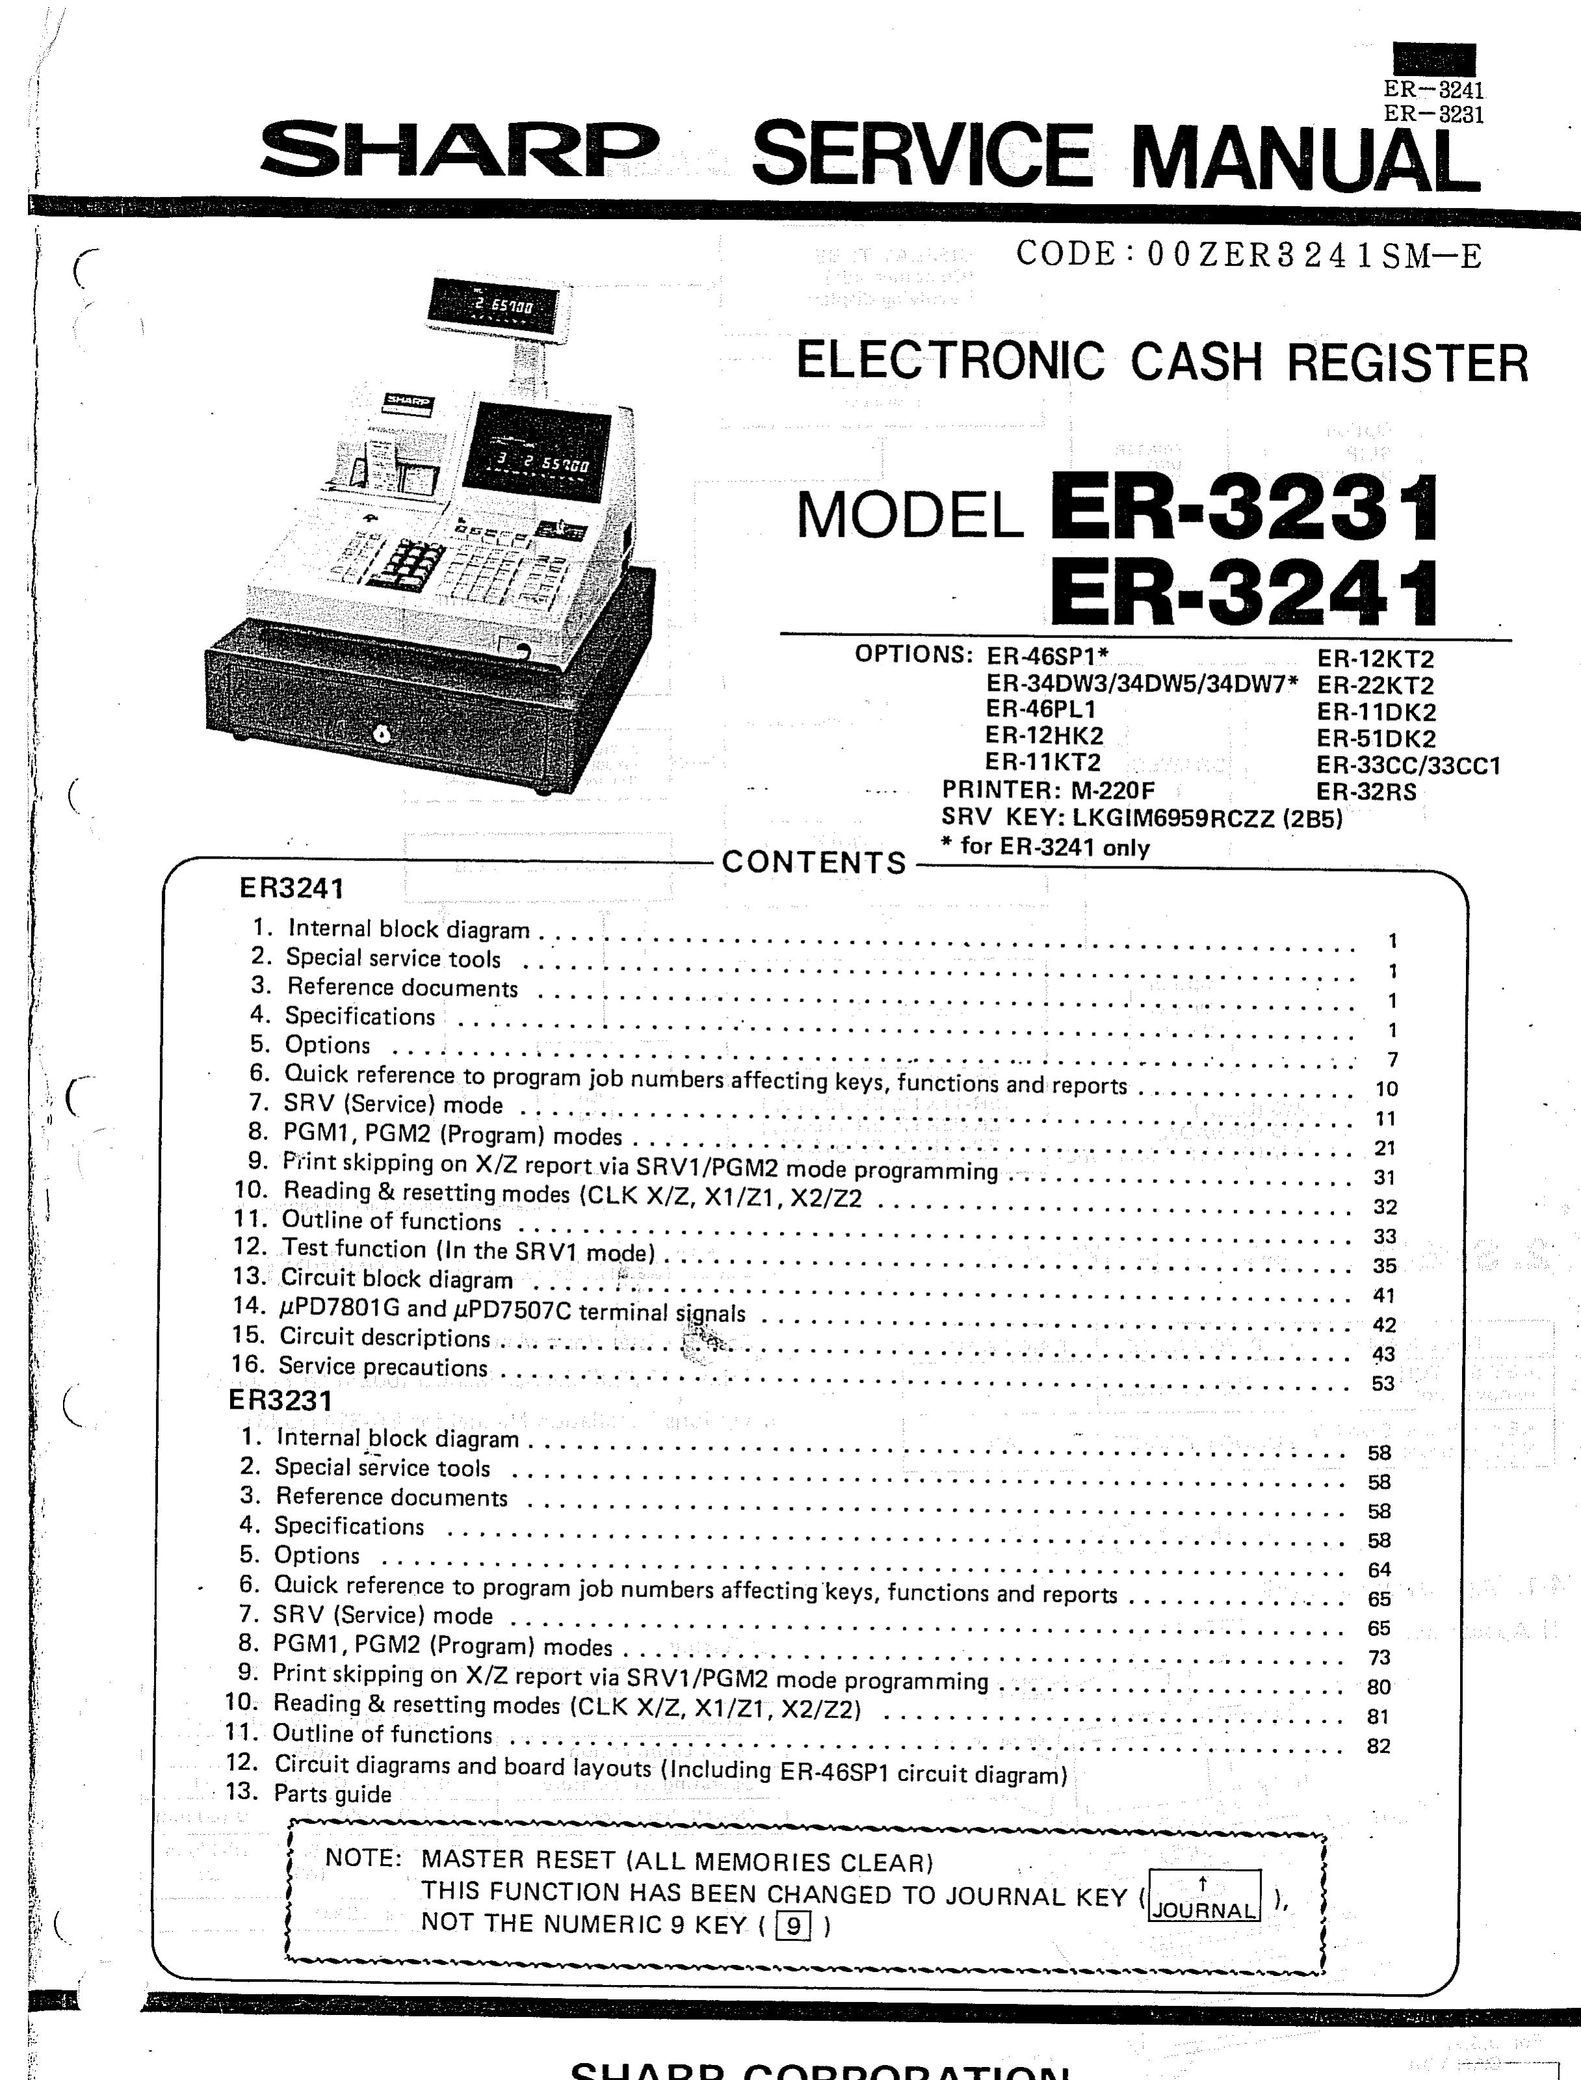 Sharp ER-3241 Cash Register User Manual